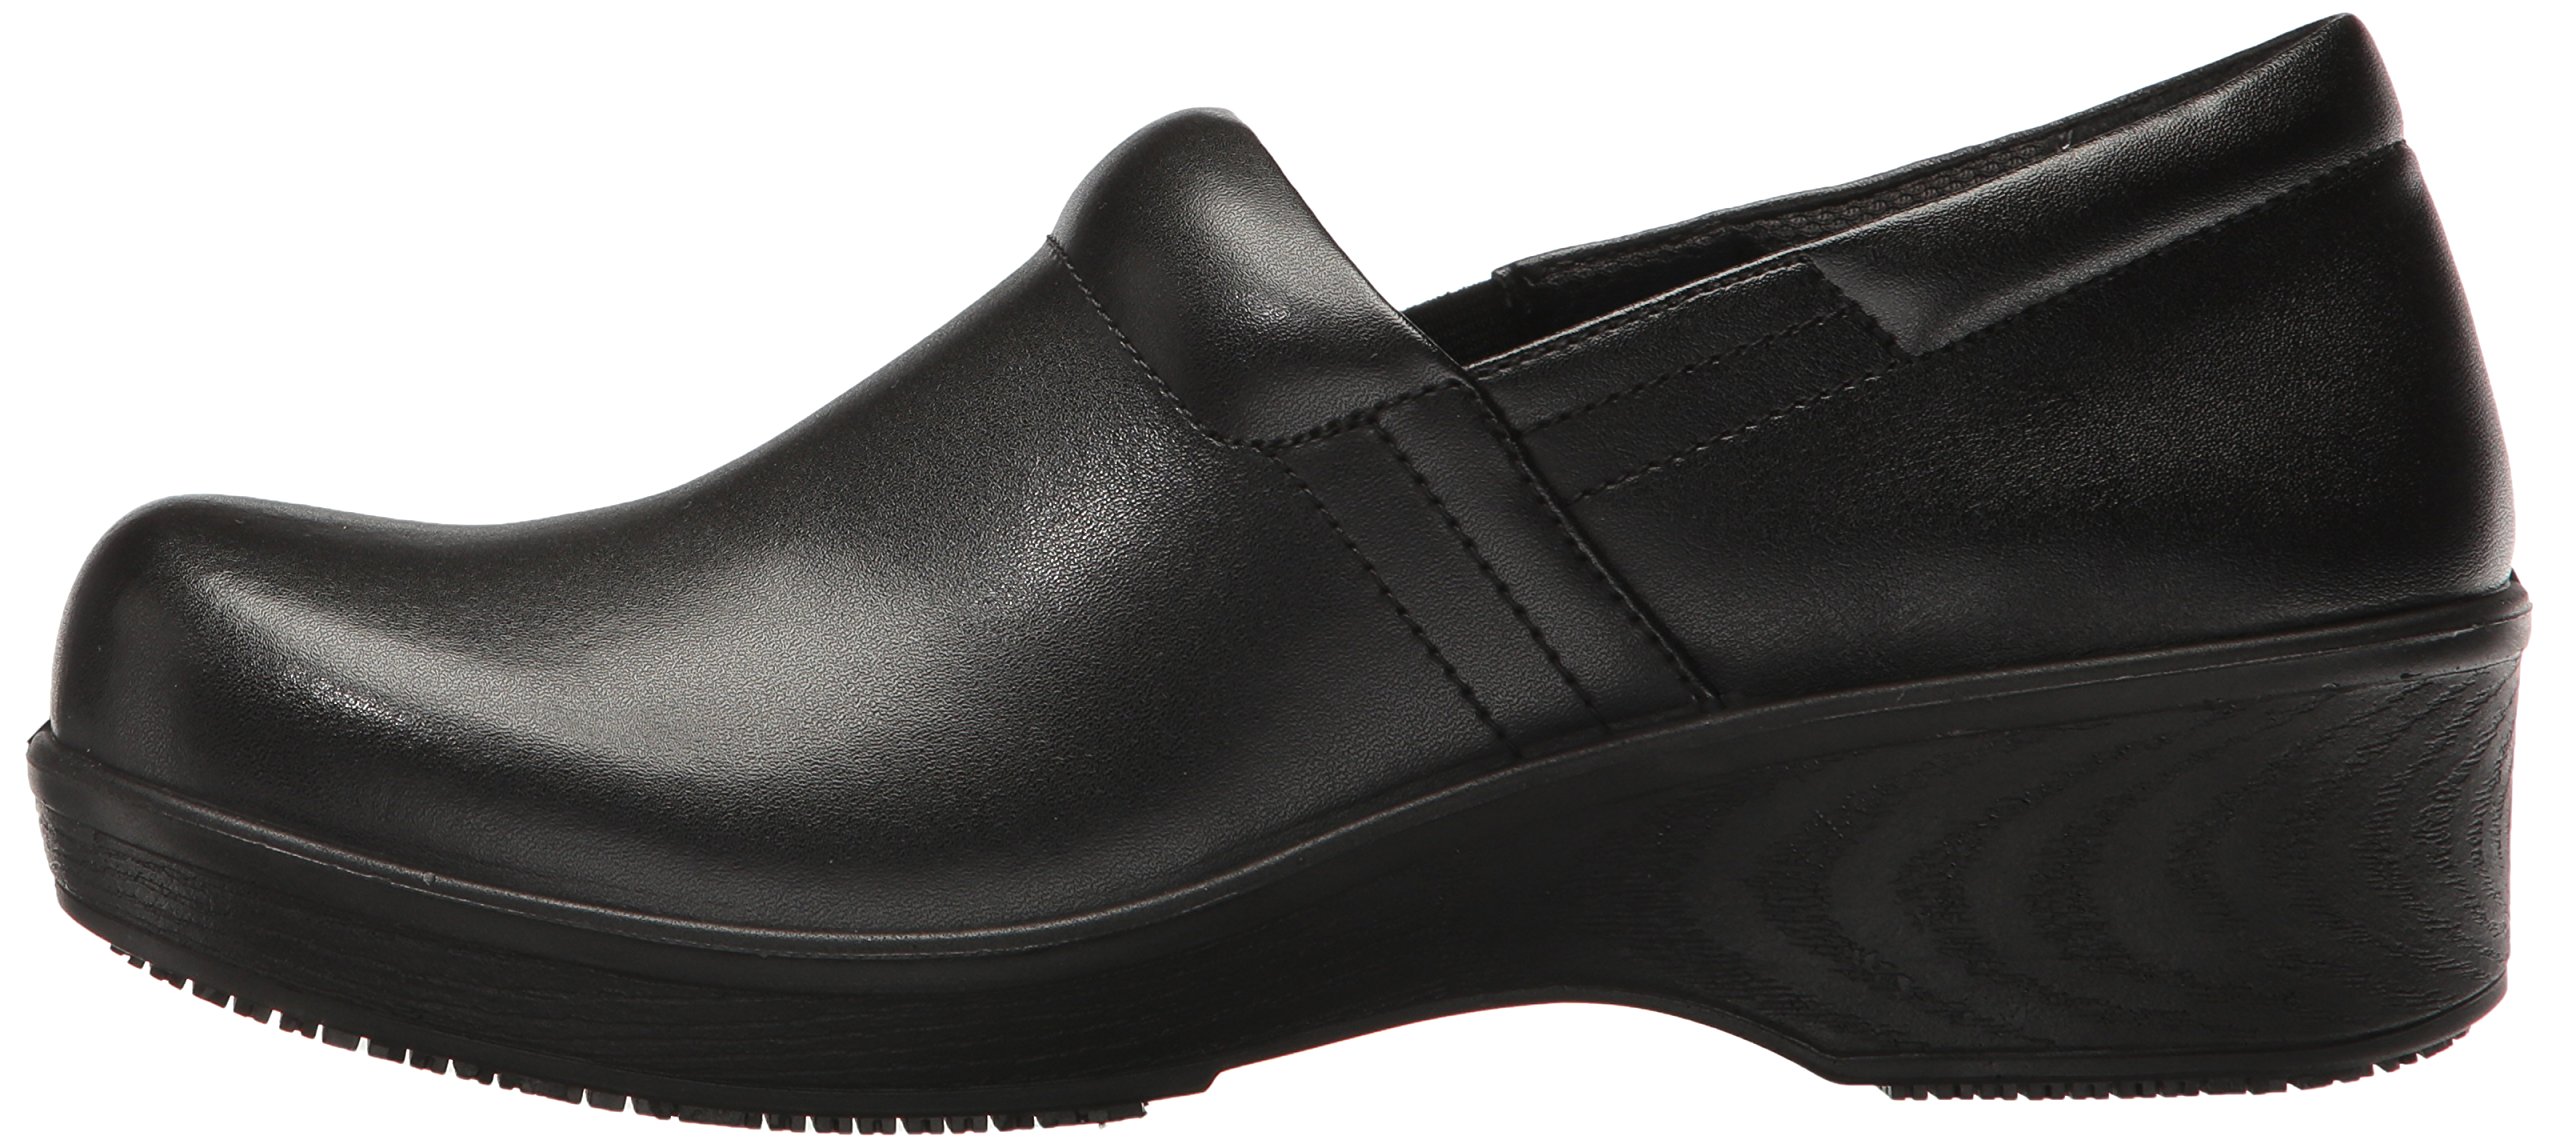 Dr. Scholl's Shoes Women's Dynamo Work Shoe, Black Leather, 9 US